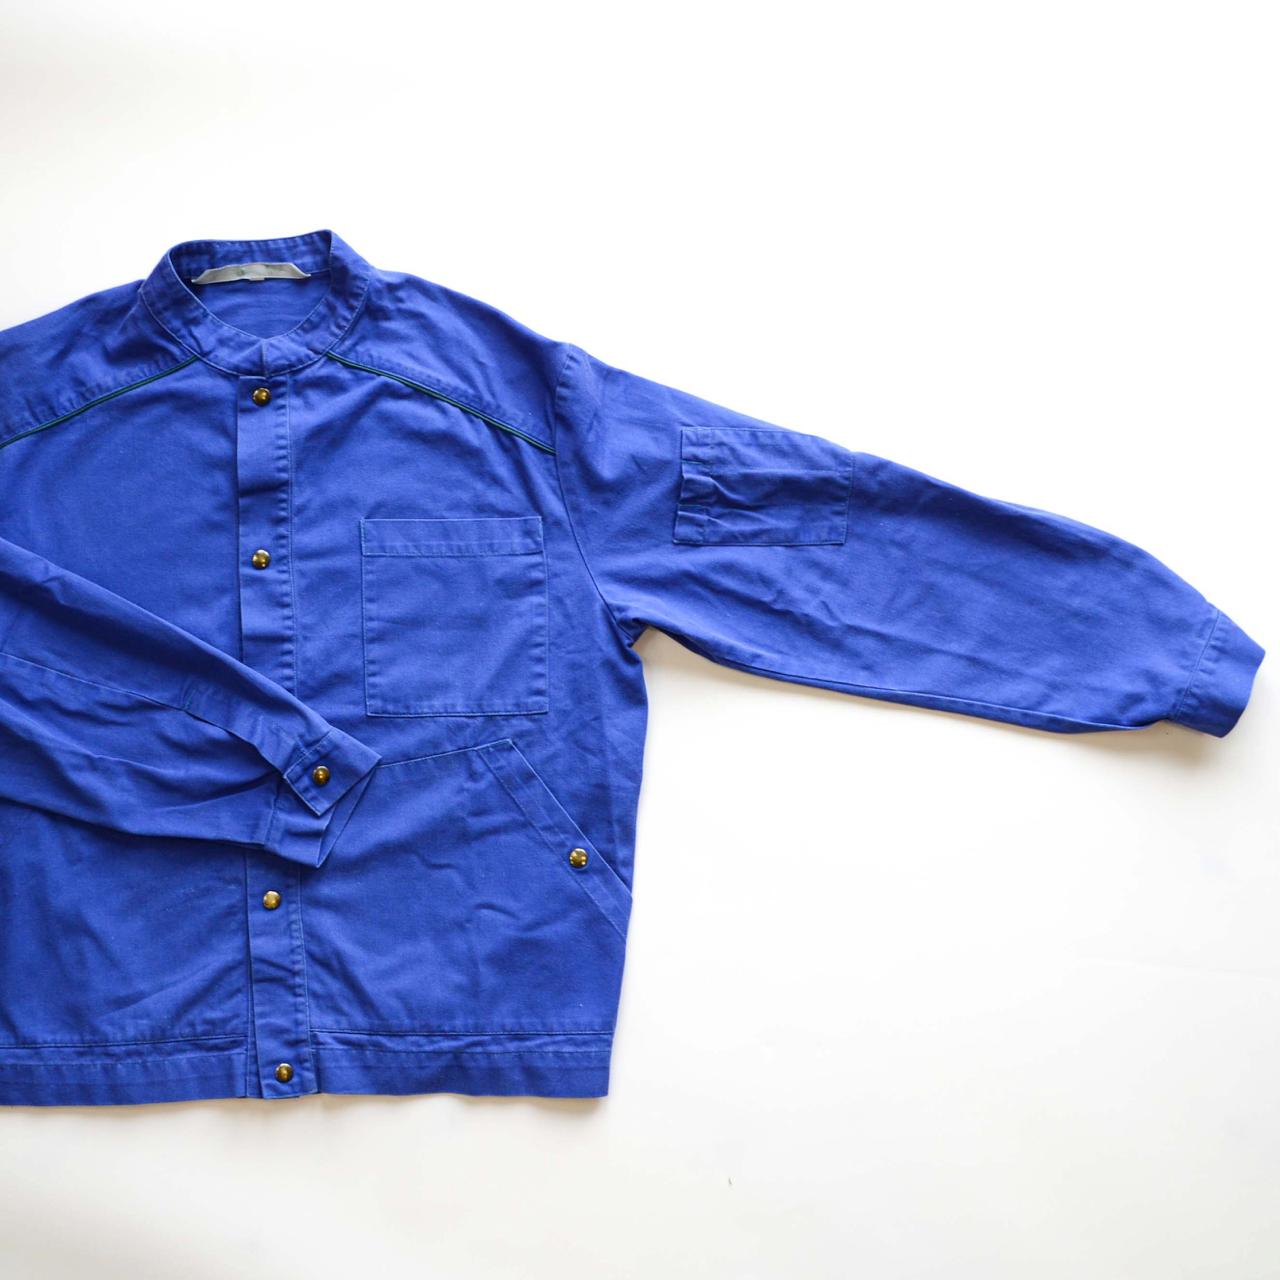 Vintage French Chore Jacket With Mandarin... - Depop